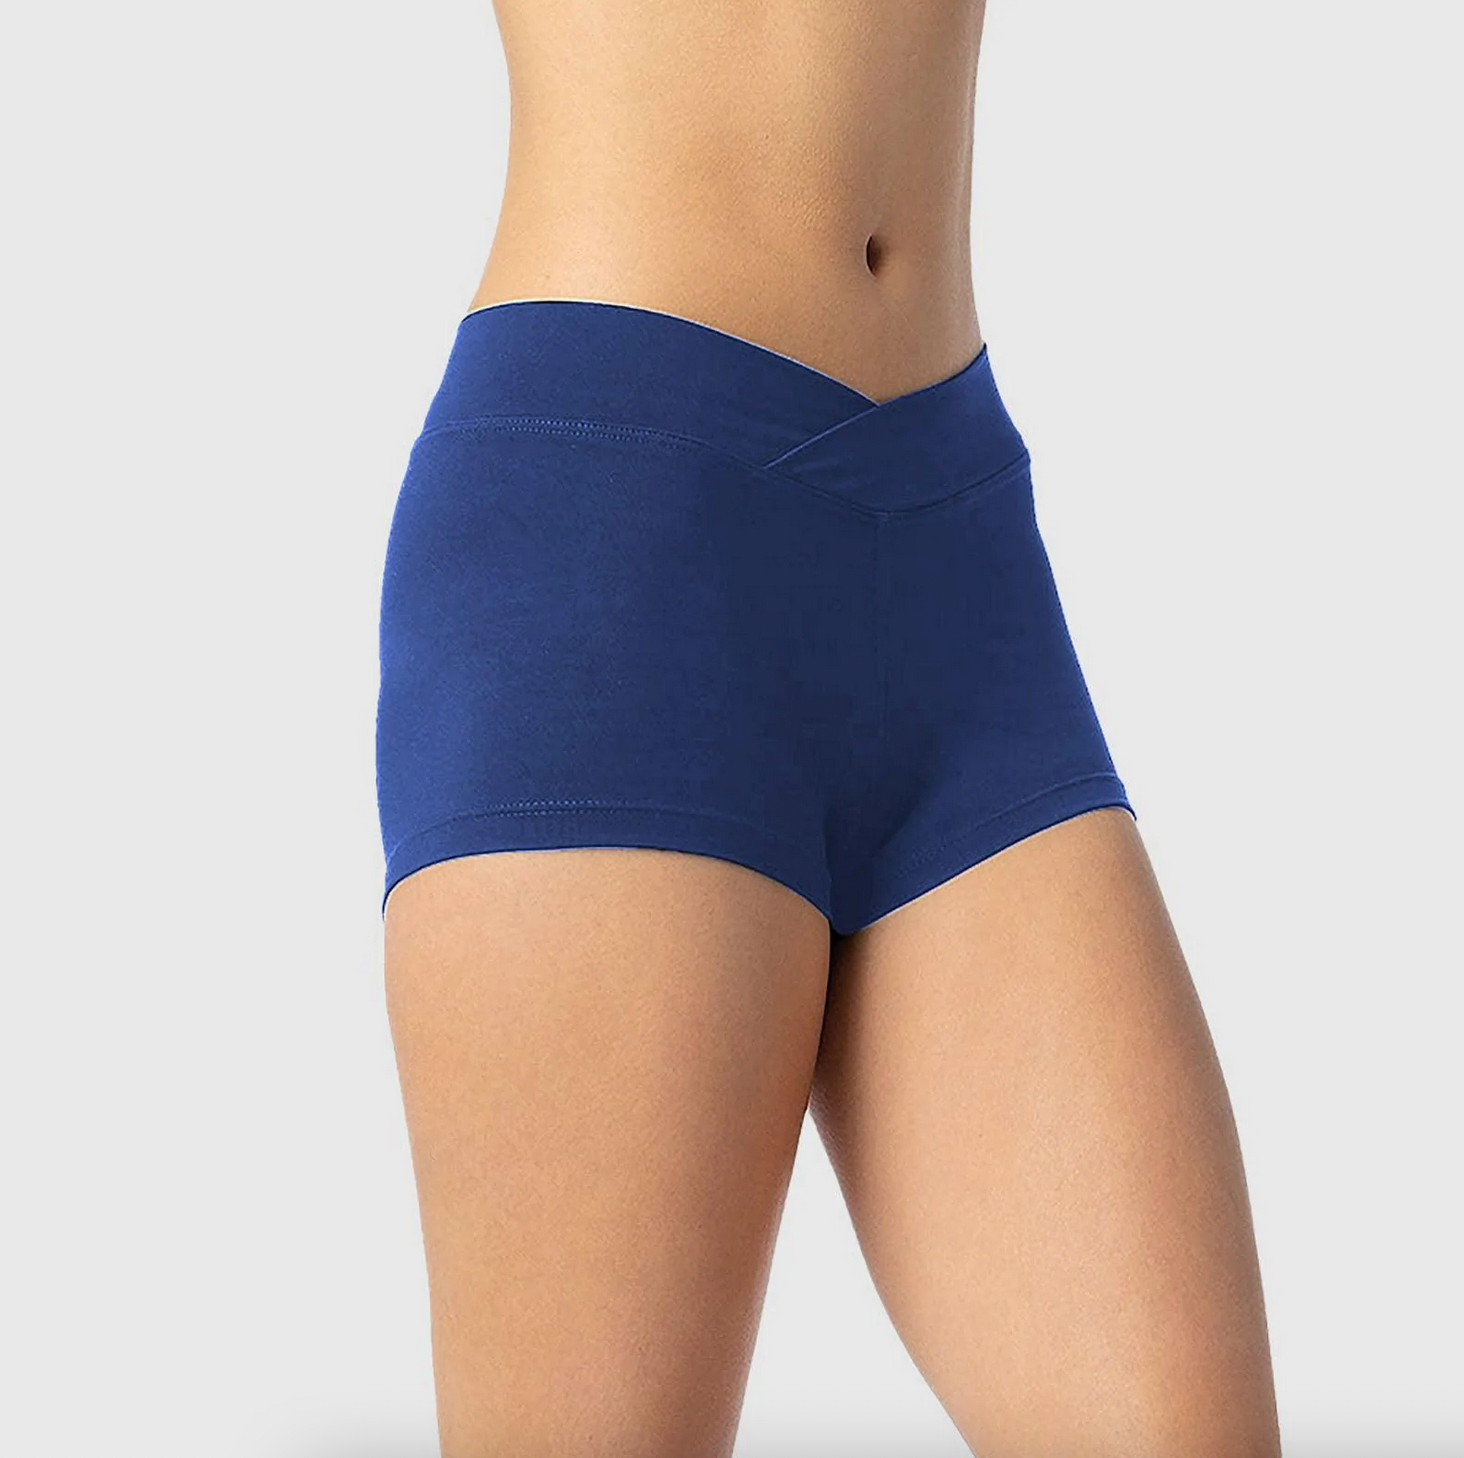 Shorts with V-Front Waistline